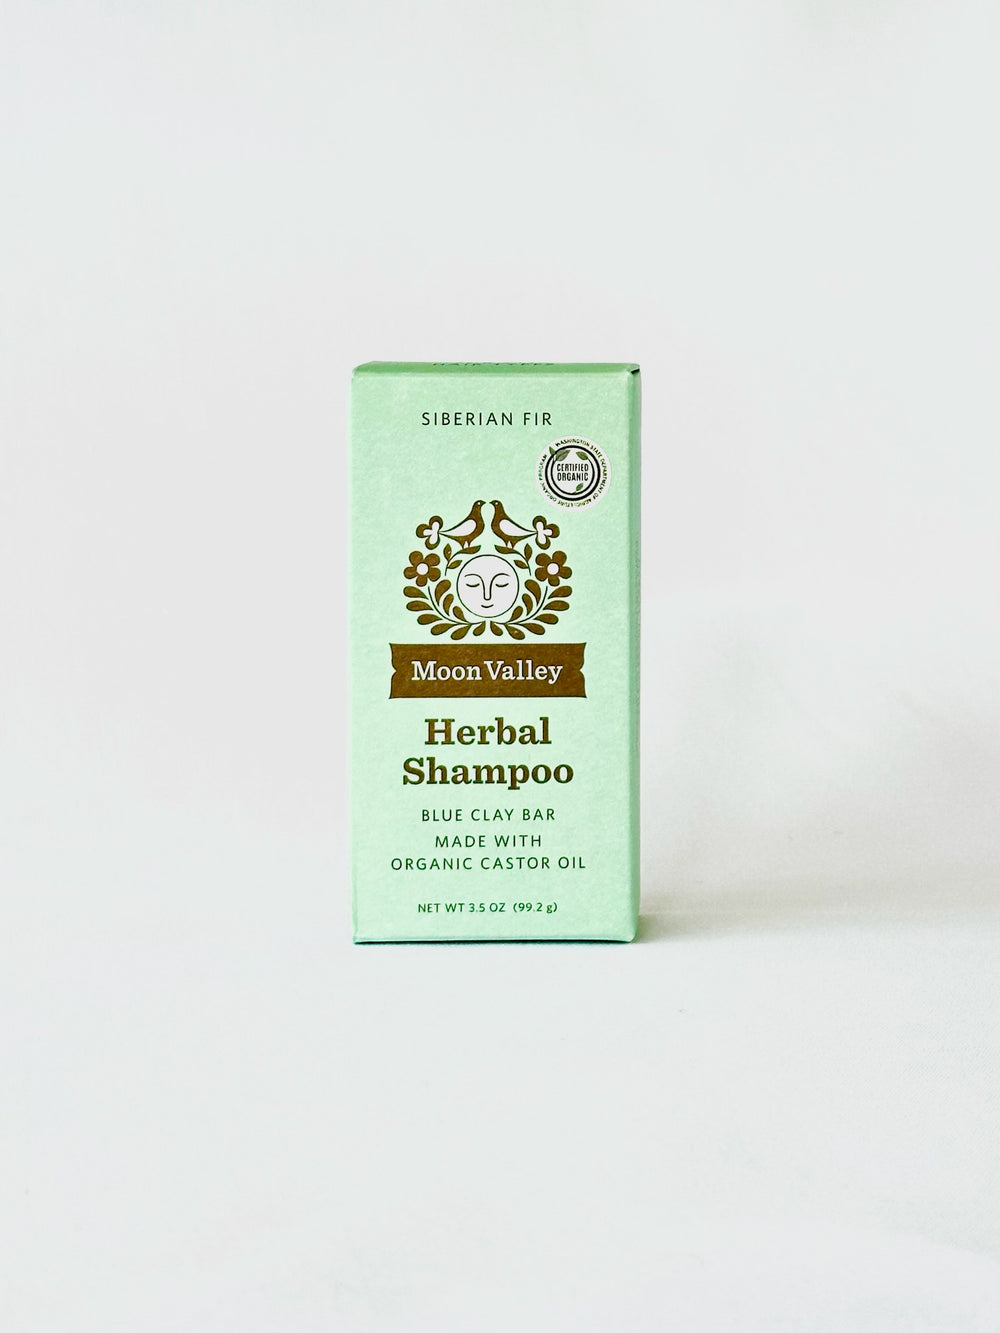 Siberian Fir Herbal Shampoo Bar